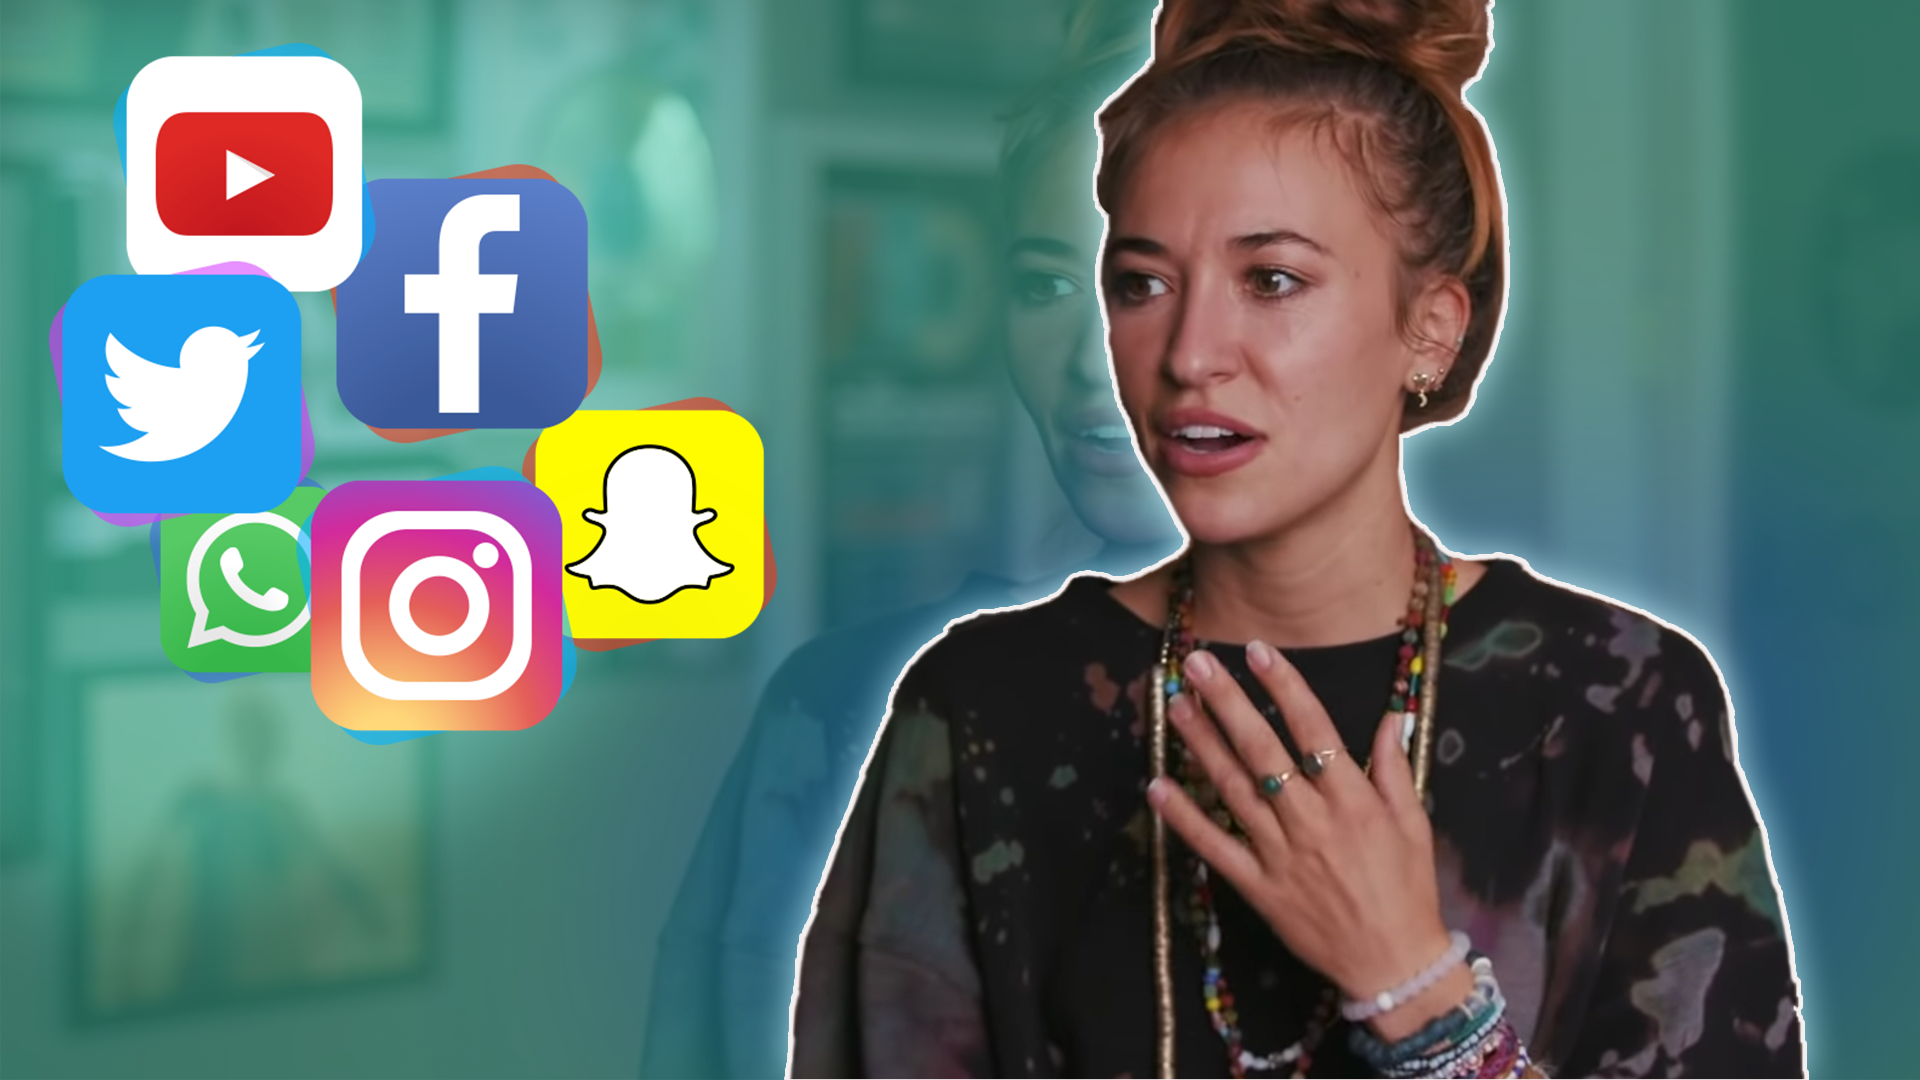 Lauren Daigle Responds to Social Media Fast